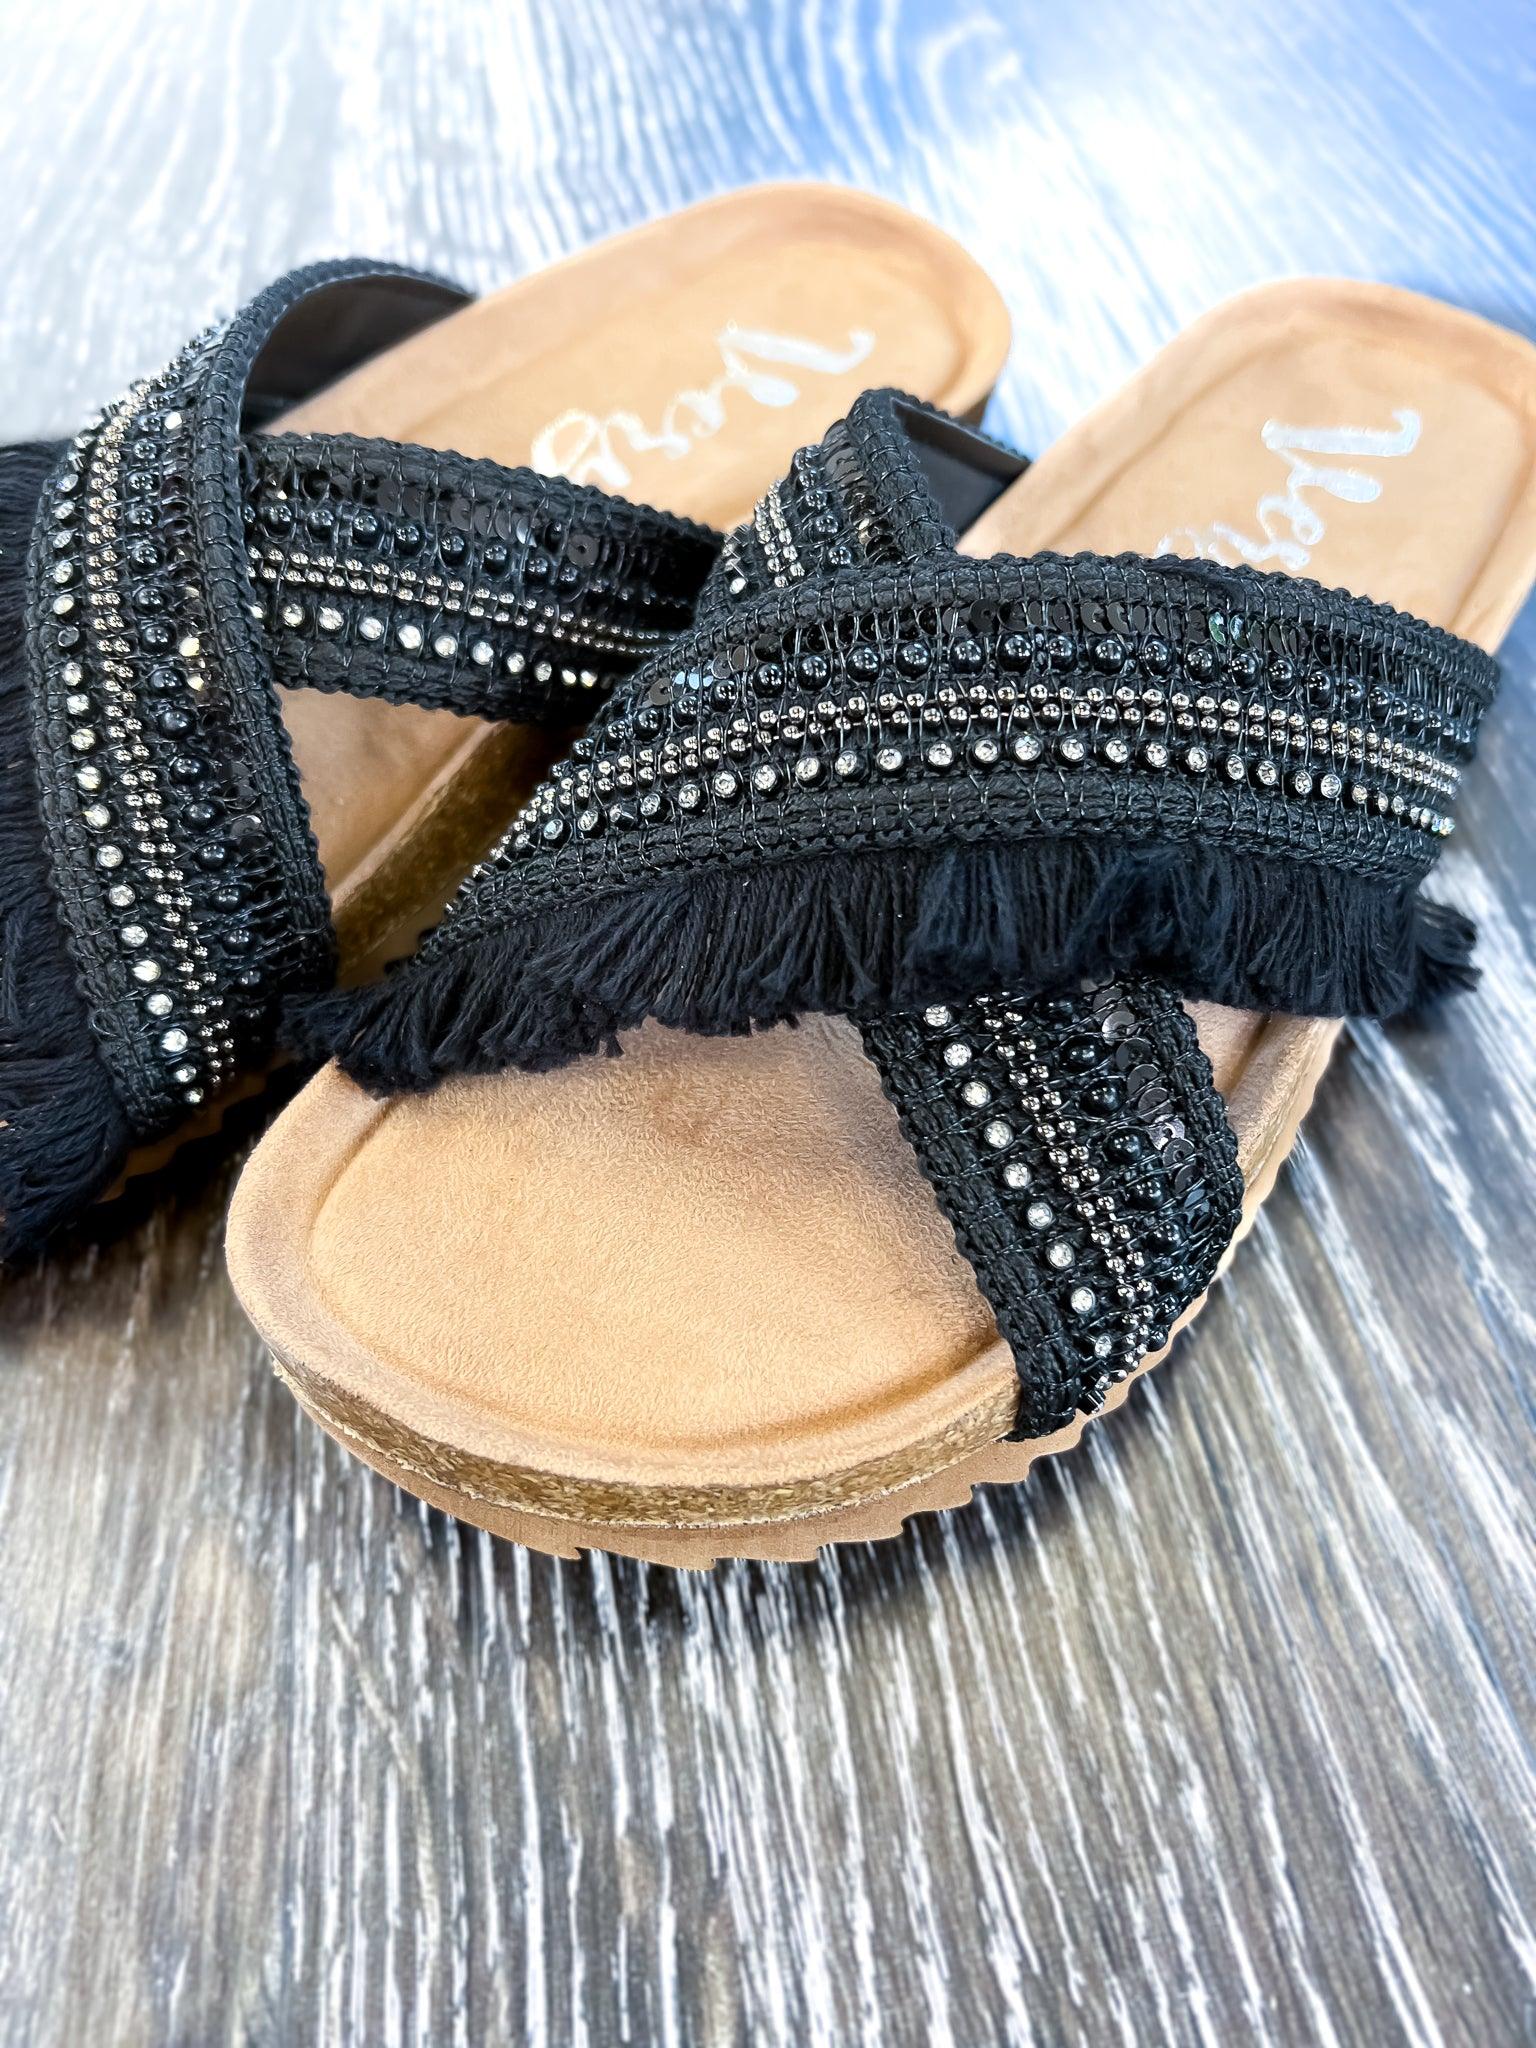 Black Solar Sandals - The ZigZag Stripe